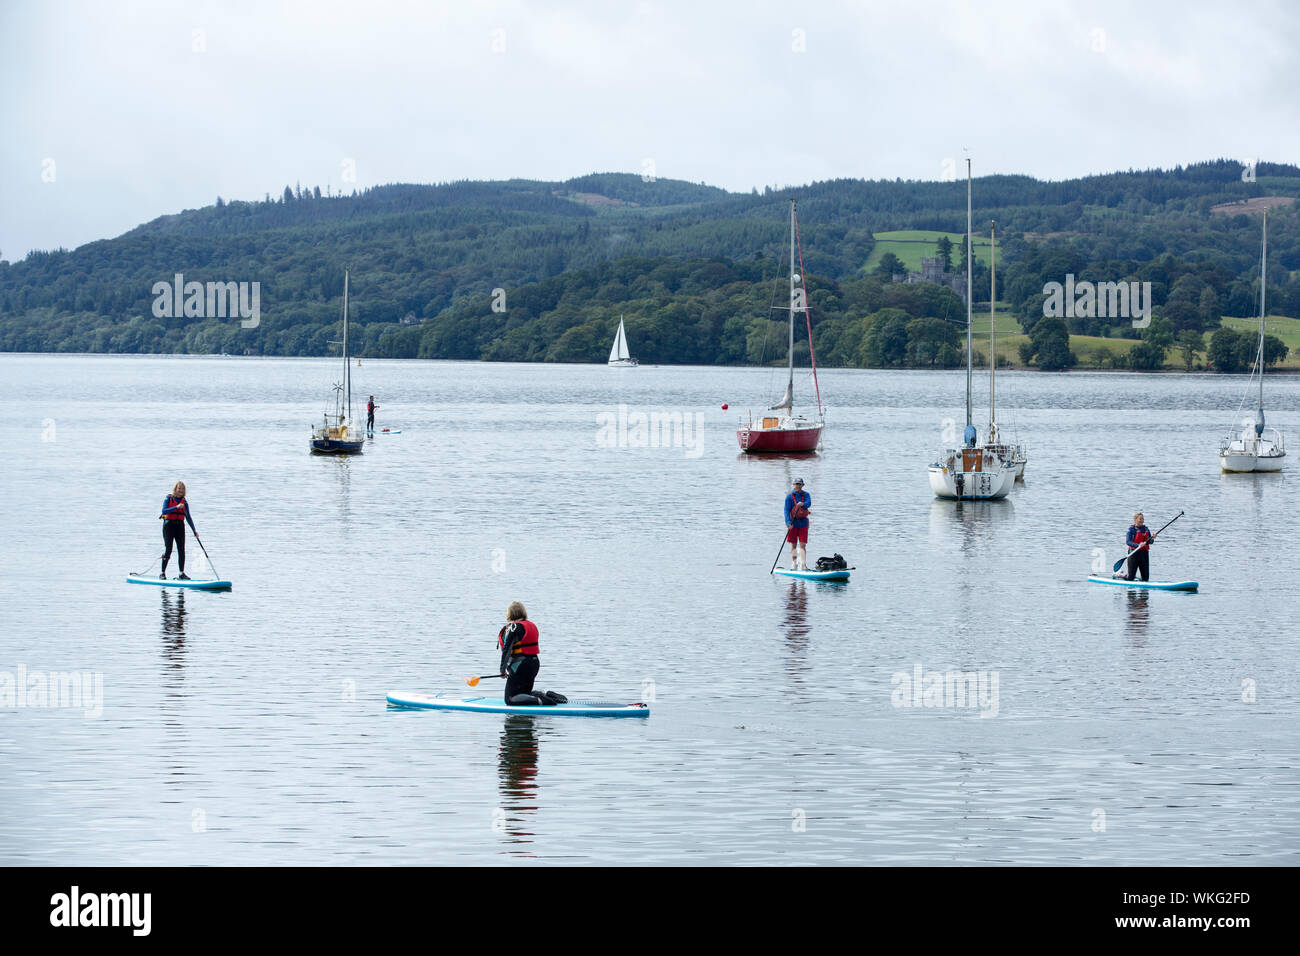 Paddle boarding lake uk hi-res stock photography and images - Alamy